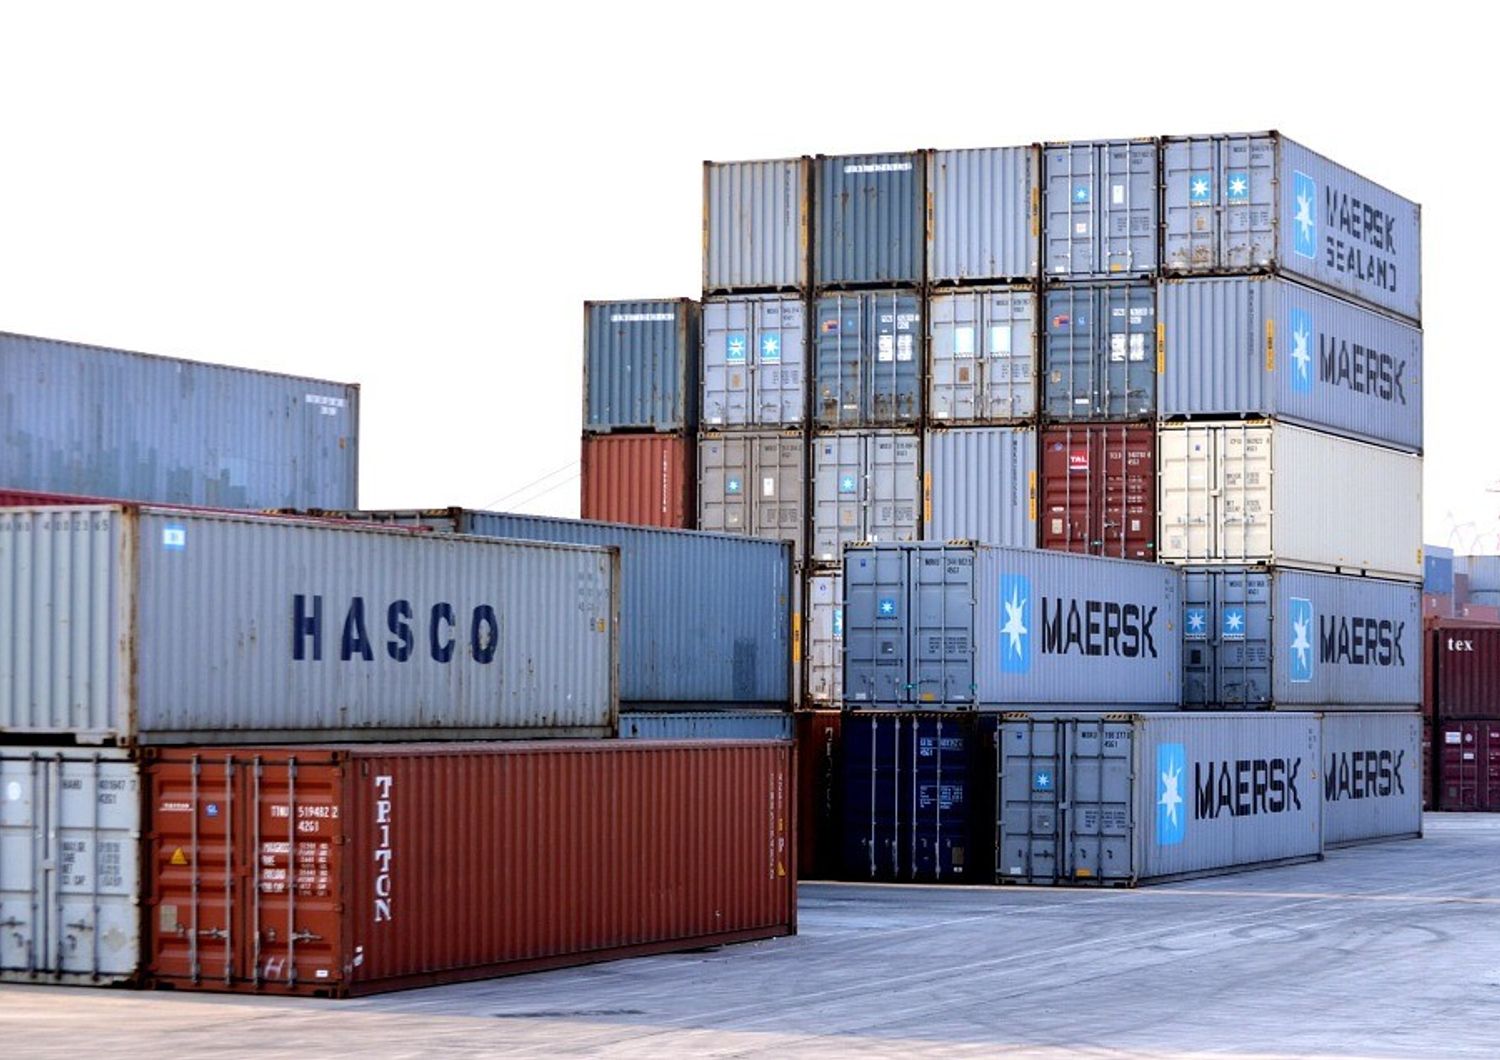 esportazione export carico container commercio estero - pixabay